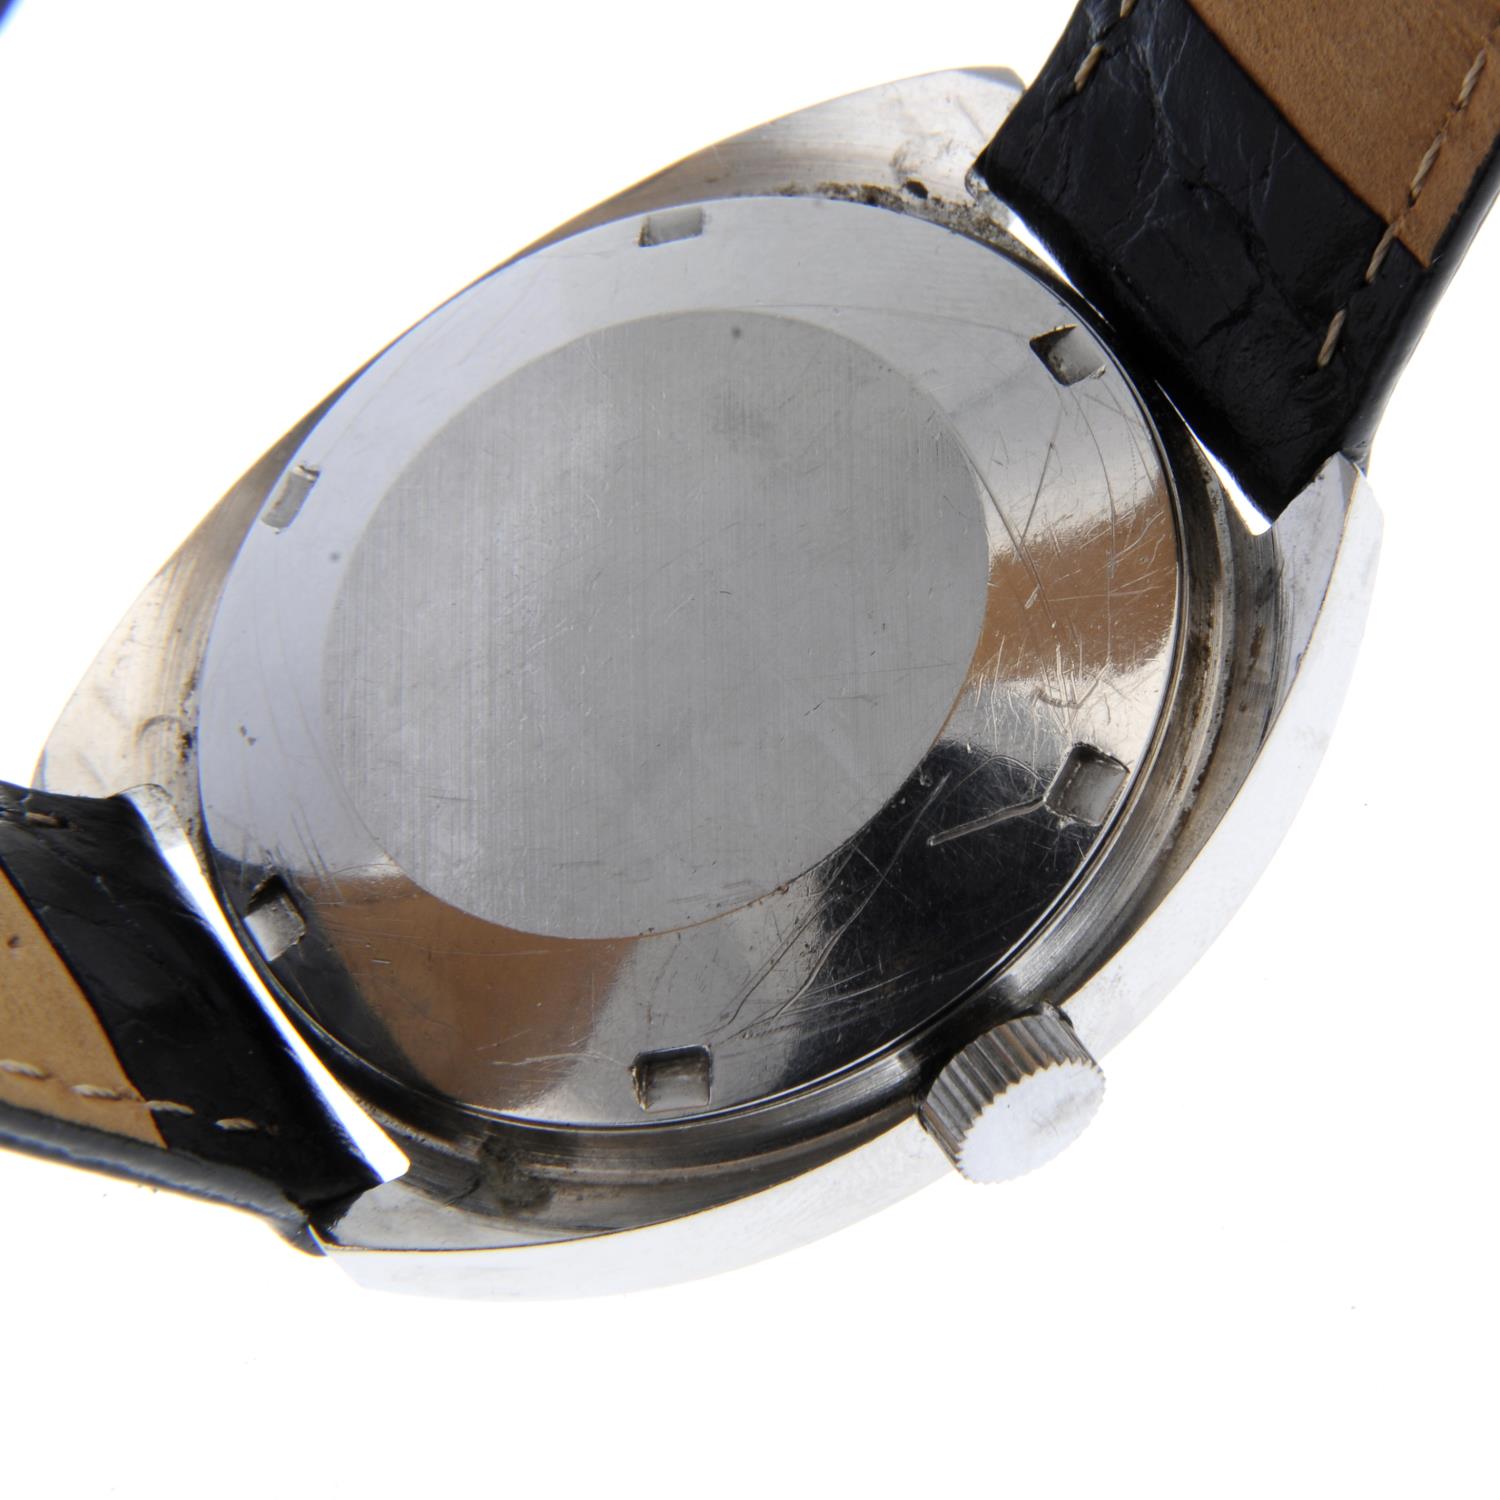 TISSOT - a gentleman's Seastar wrist watch. - Image 2 of 4